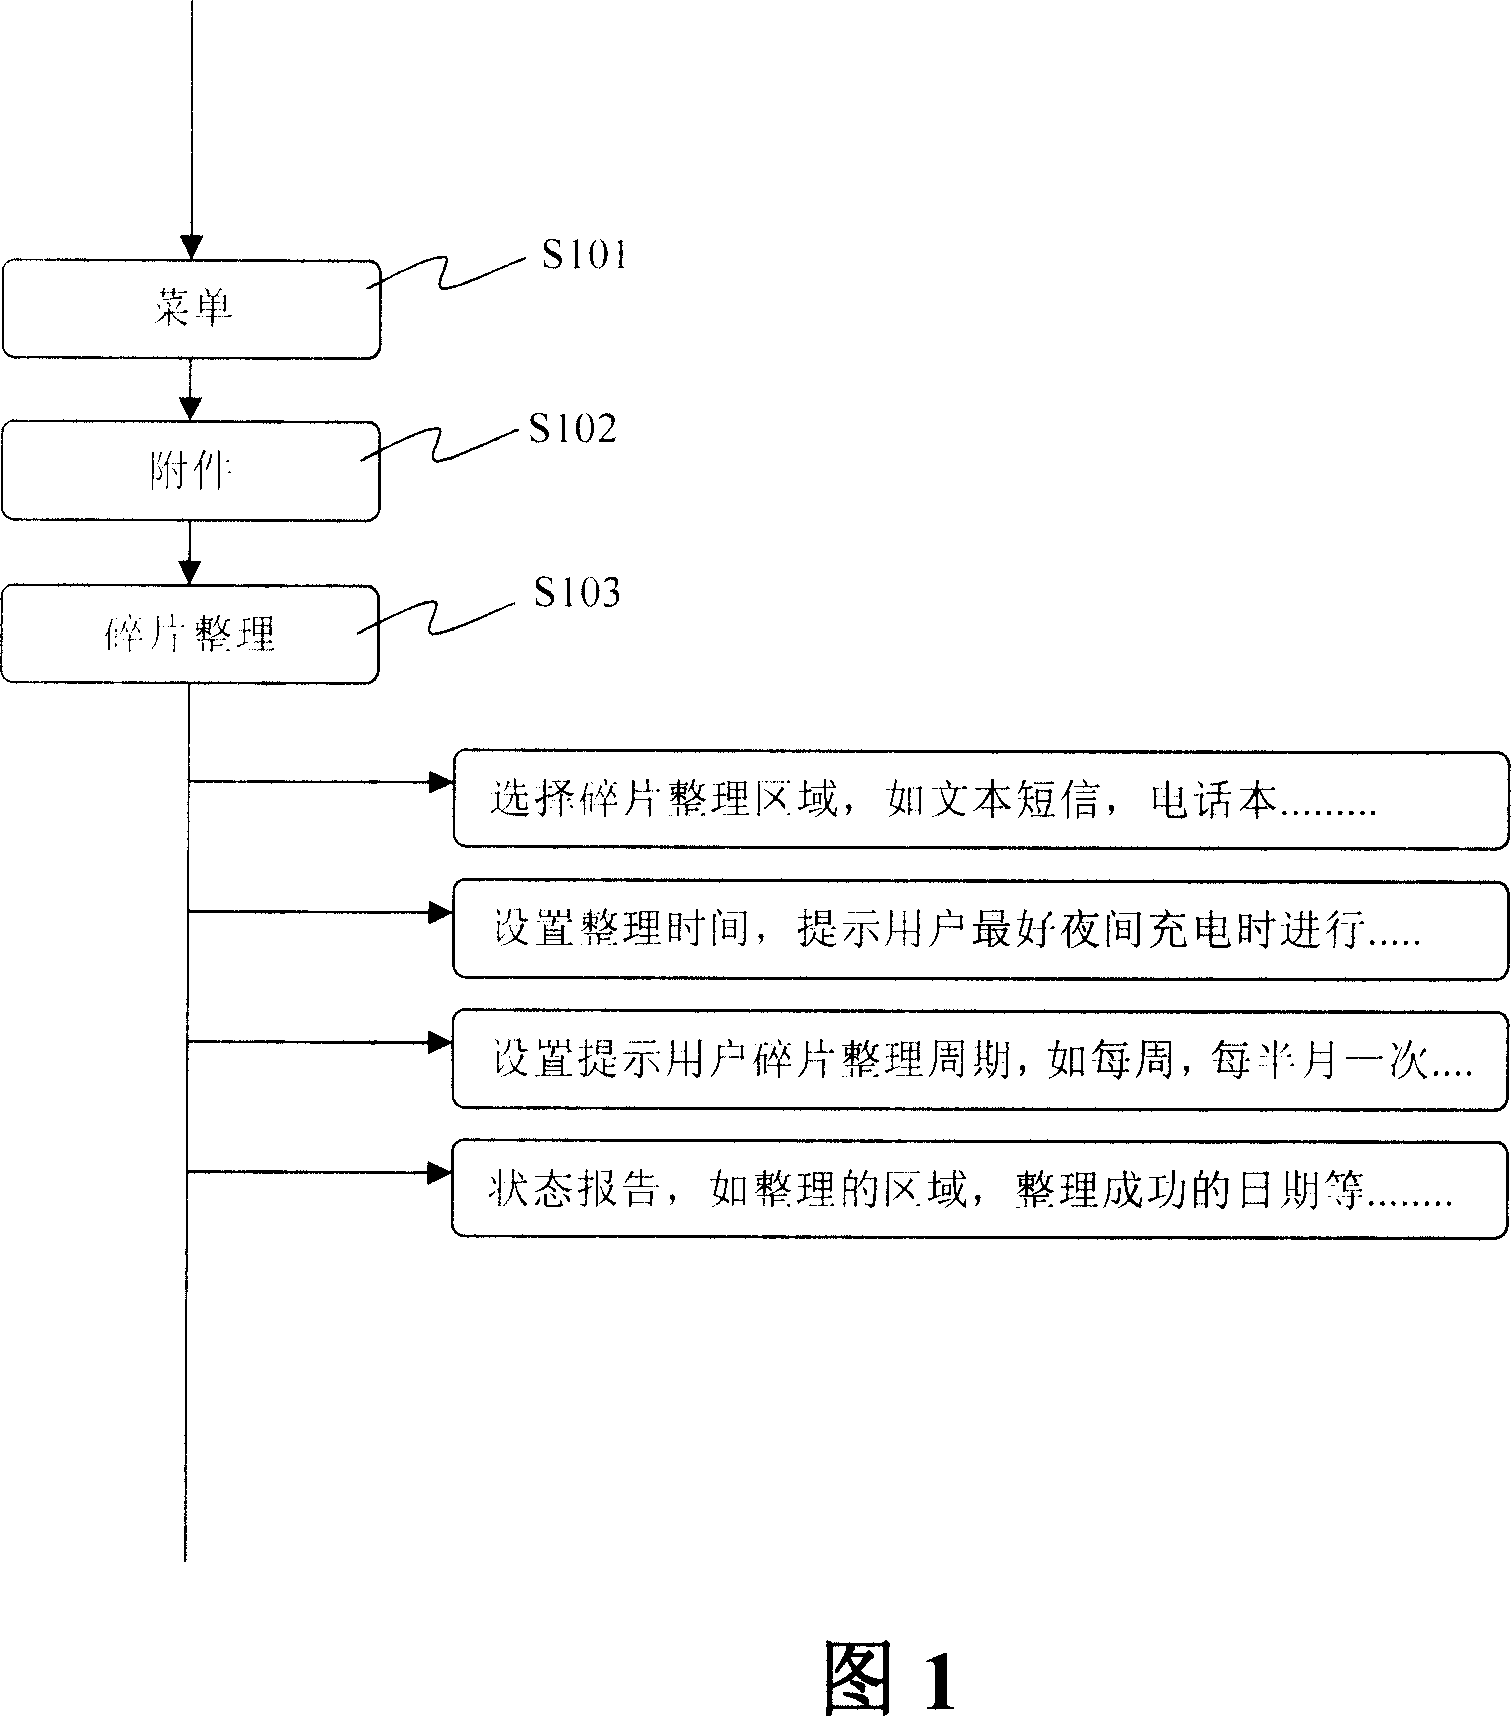 Method for arranging mobile terminal segment